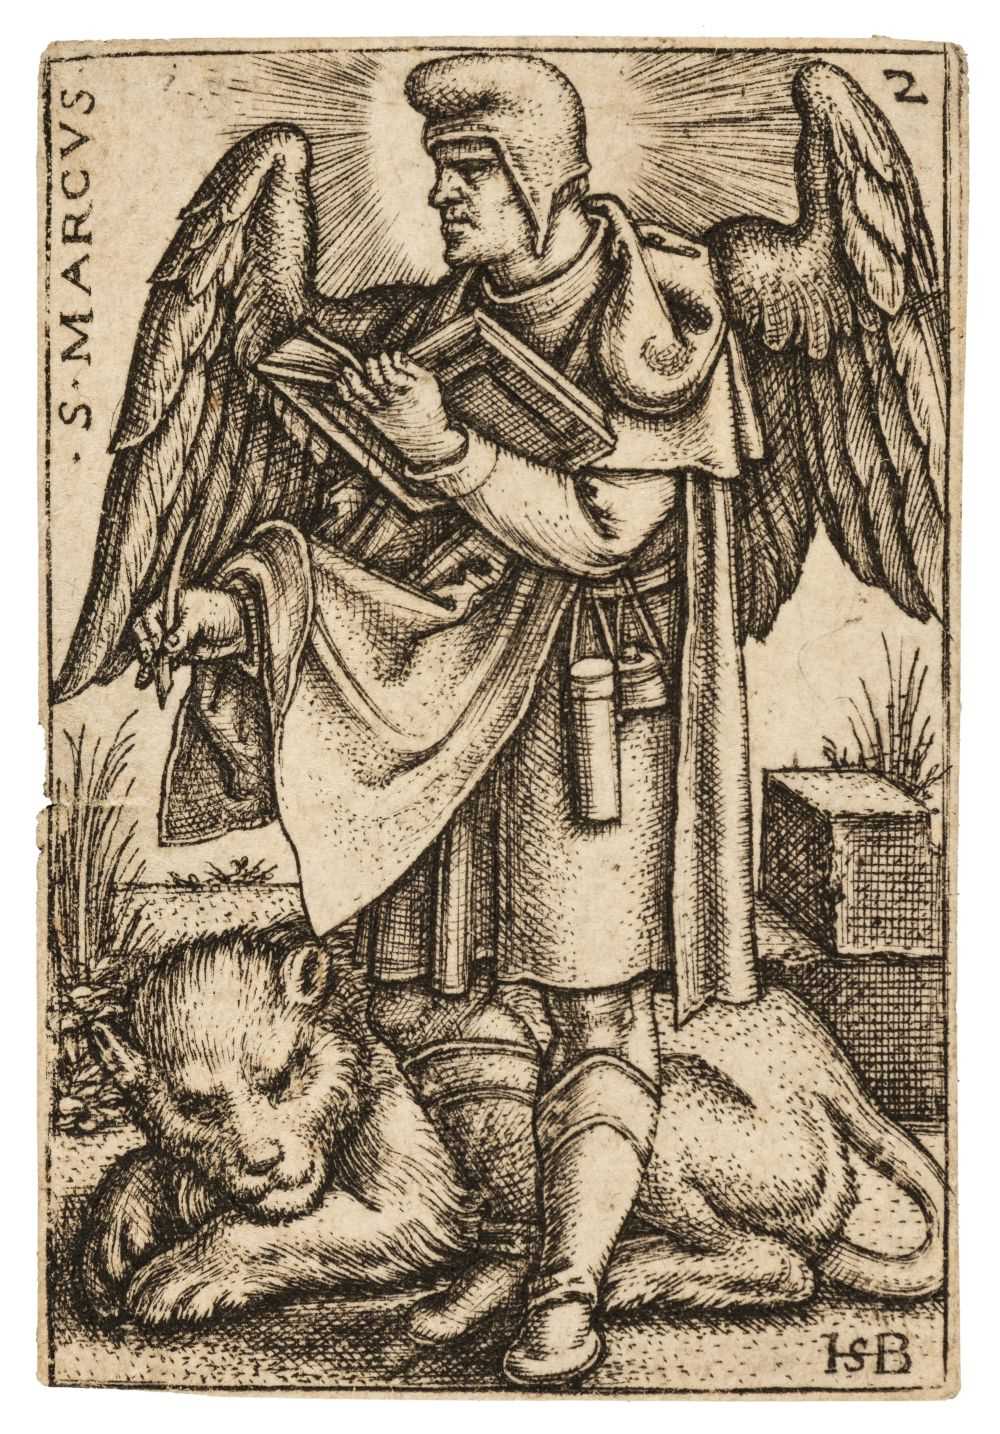 Lot 60 - Pencz (Georg, 1500-1550) and Beham (Hans Sebald, 1500-1550), six engravings, 1520s-1540s